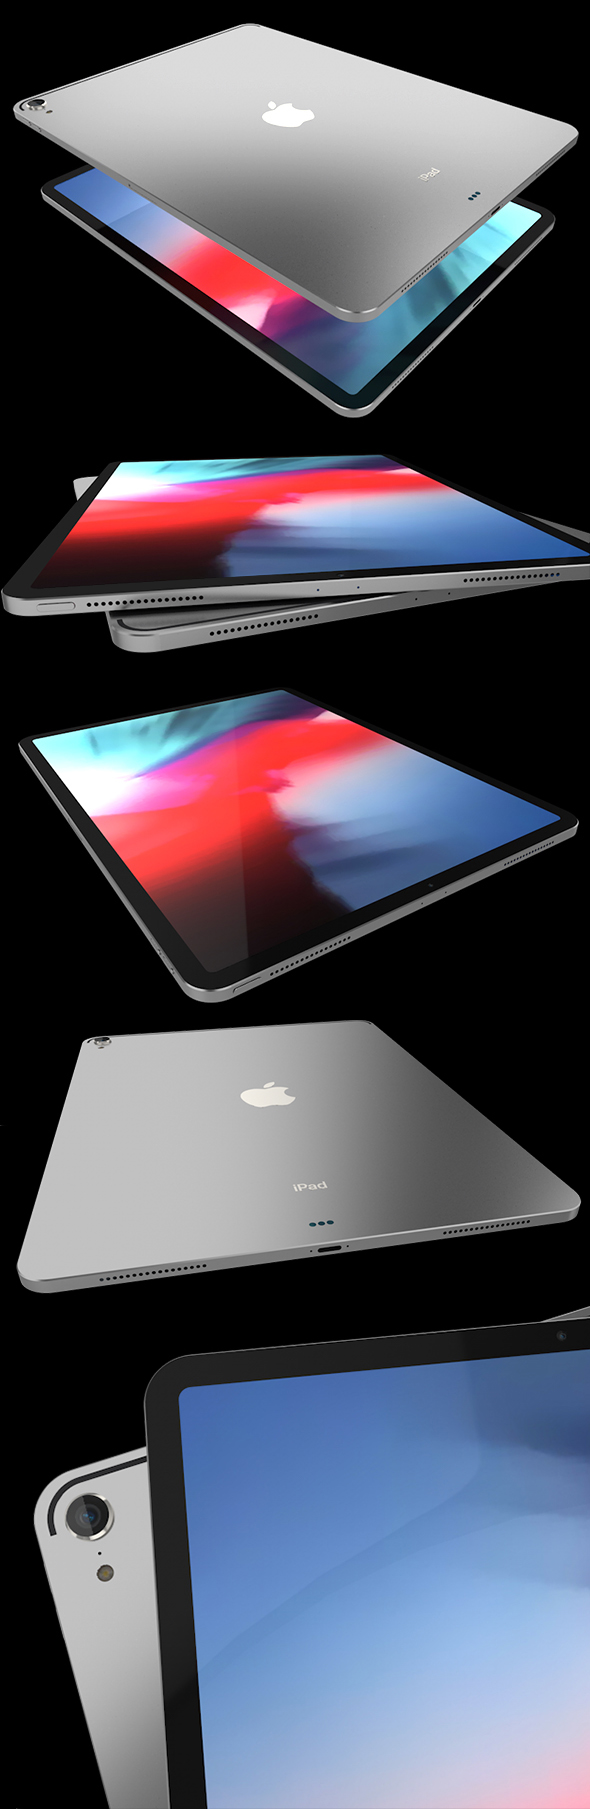 iPad Pro A12X - 3Docean 22833138